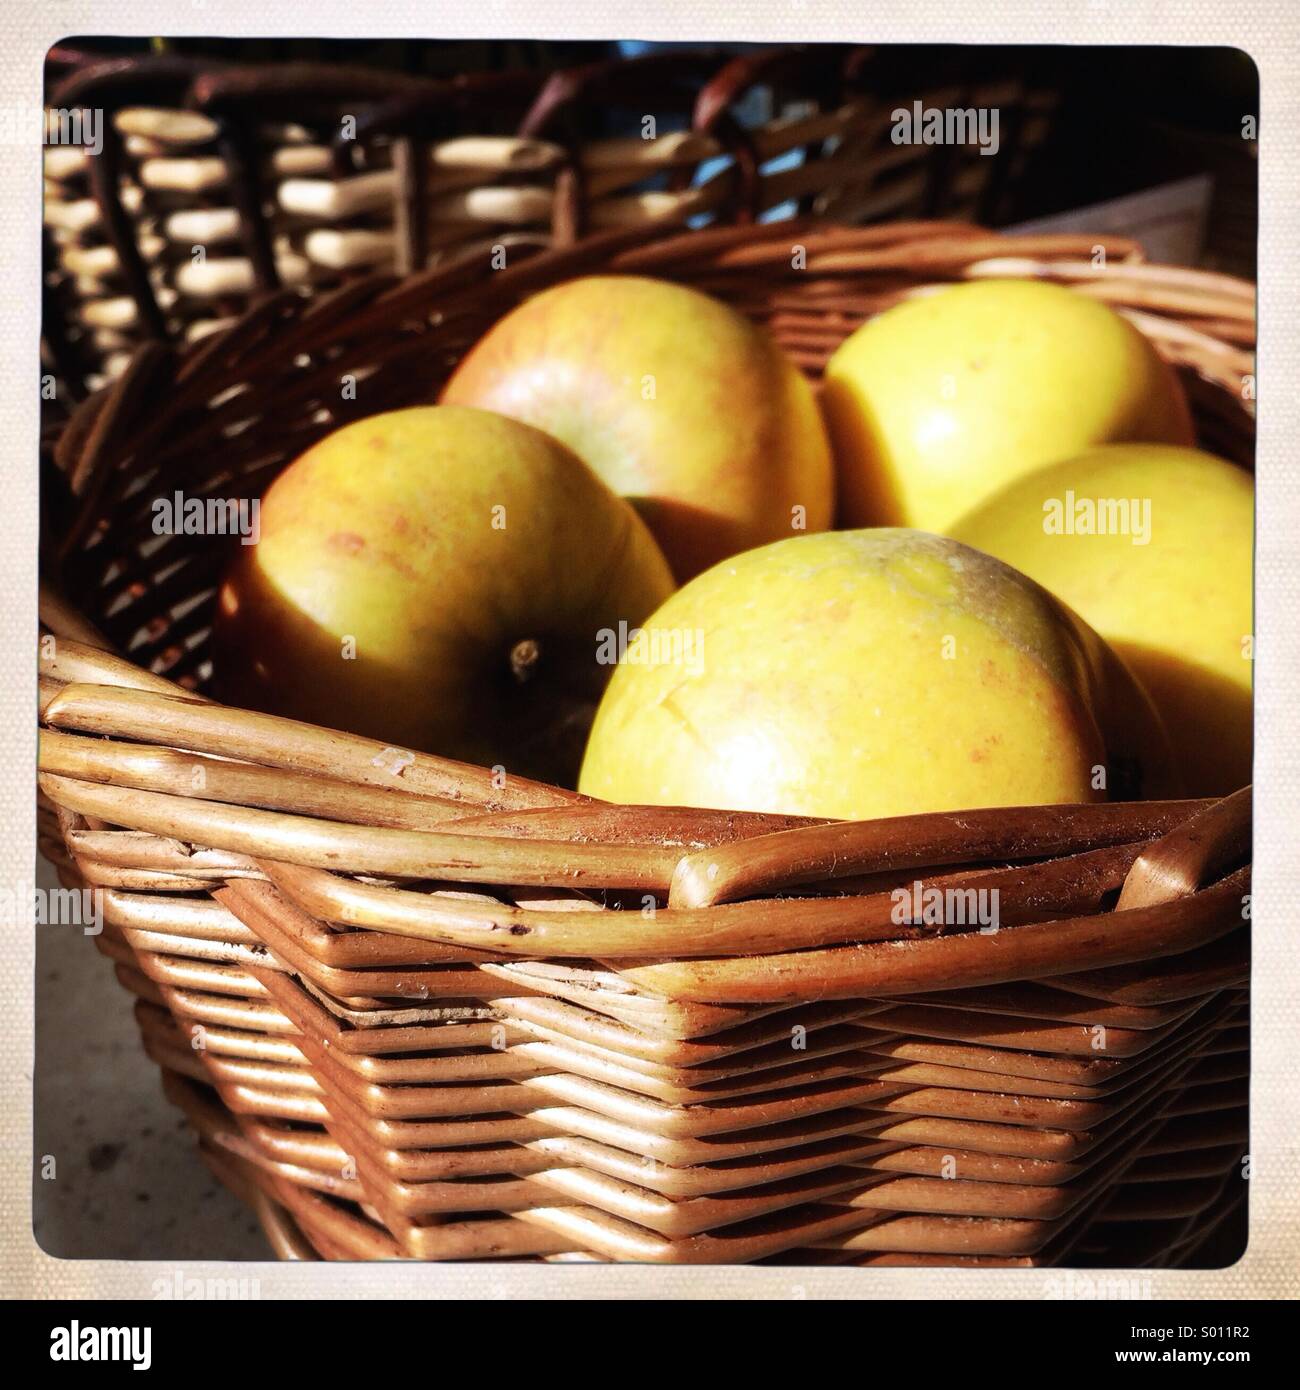 Wicker basket containing fresh juicy apples Stock Photo